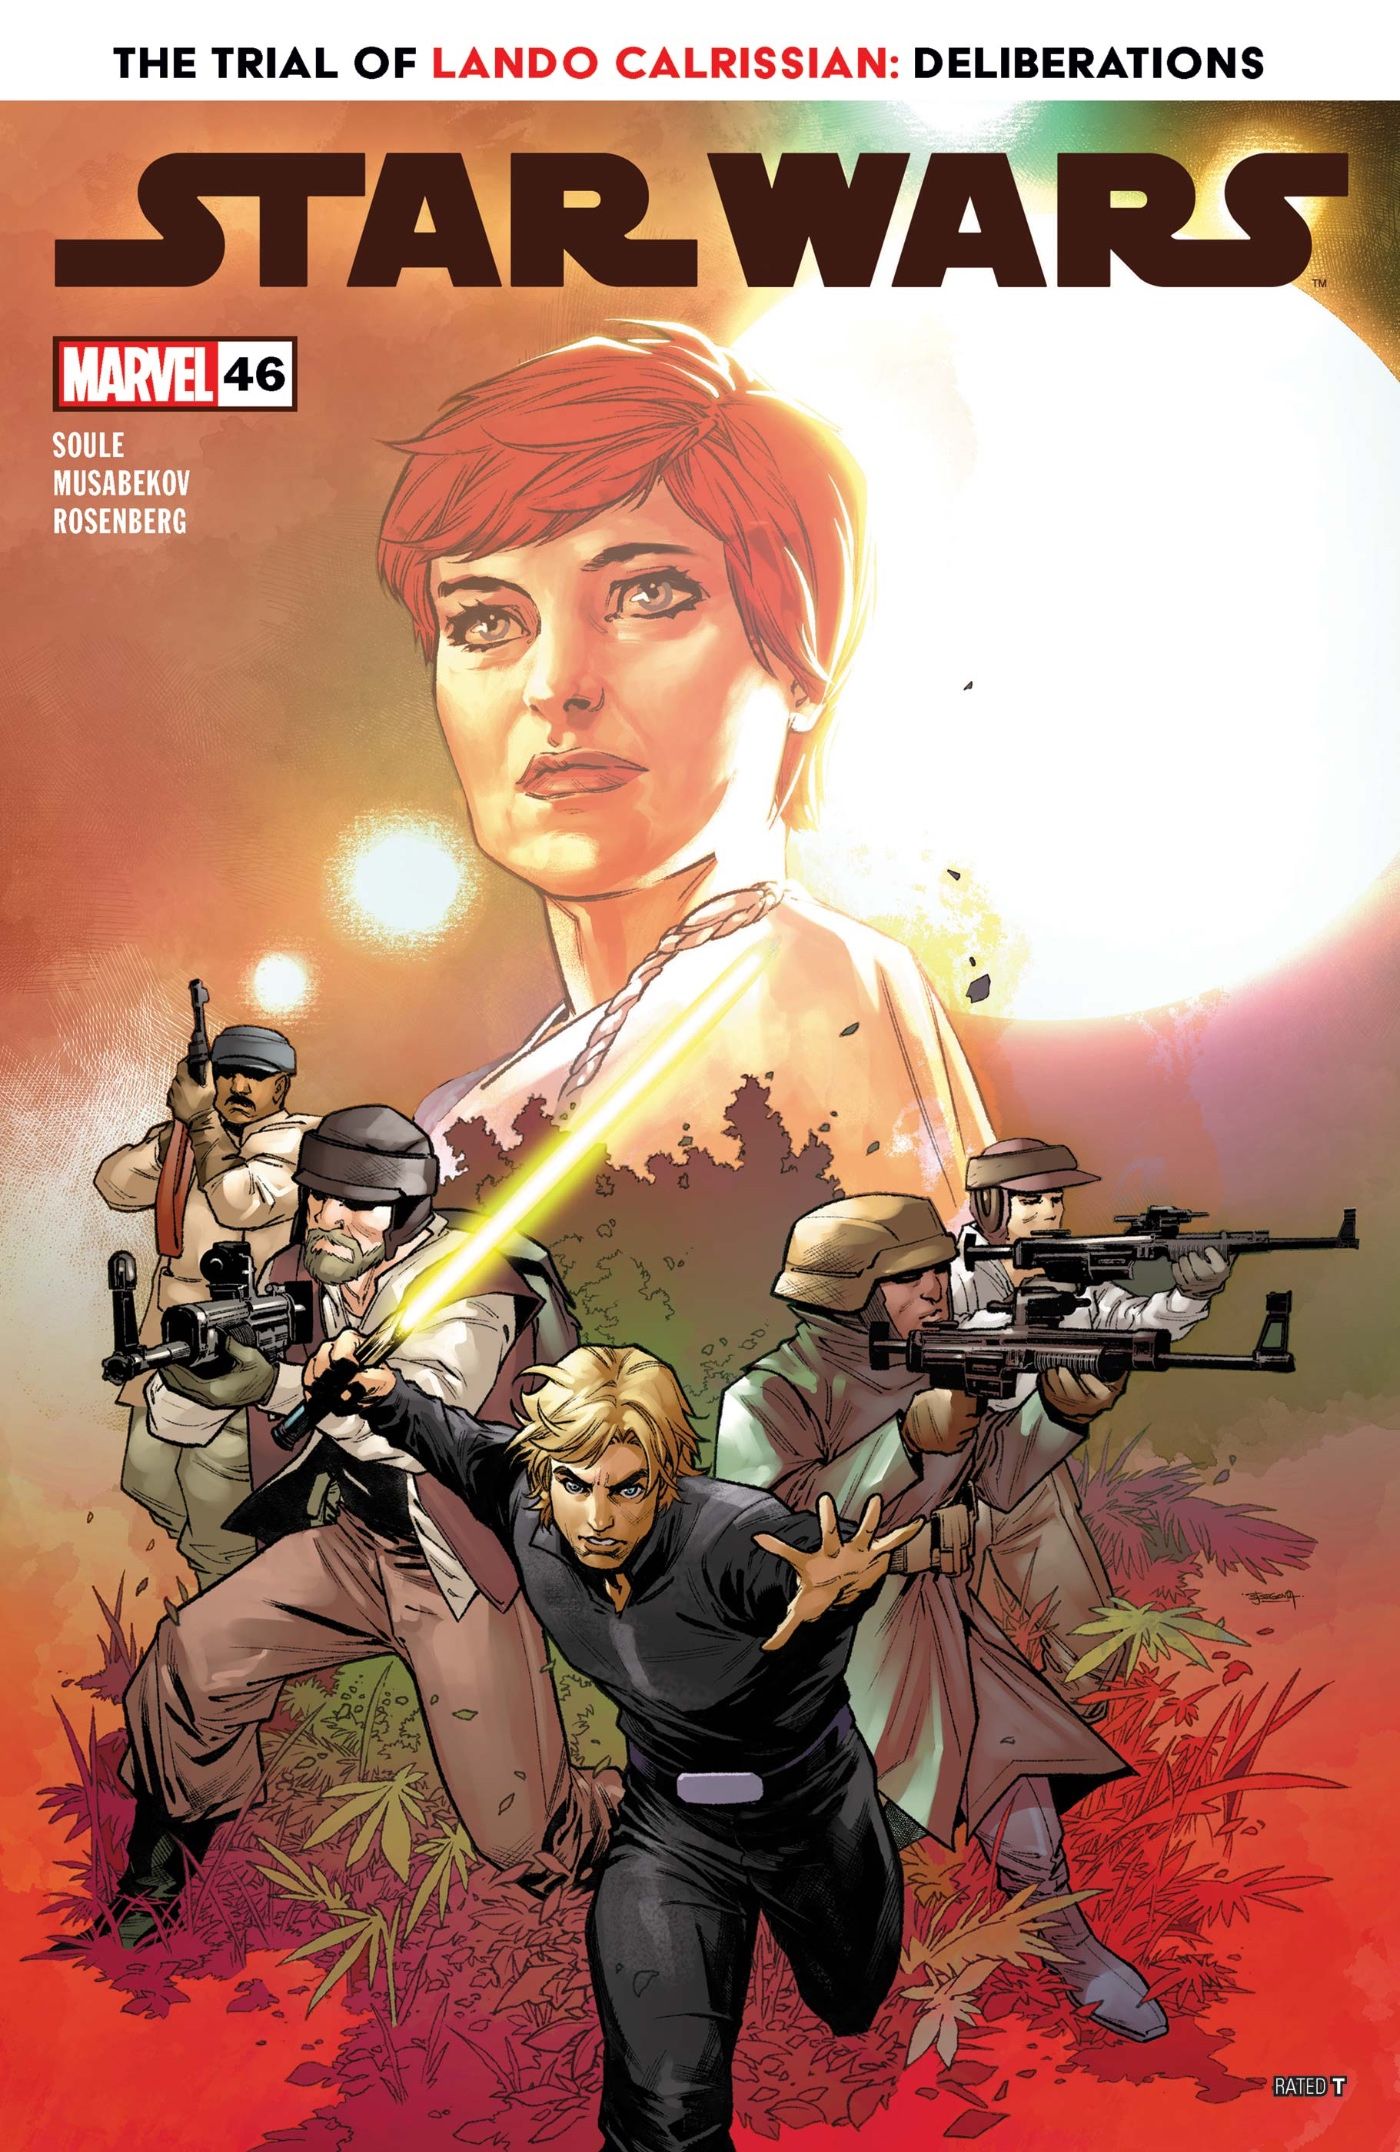 Star Wars #46 Cover Art